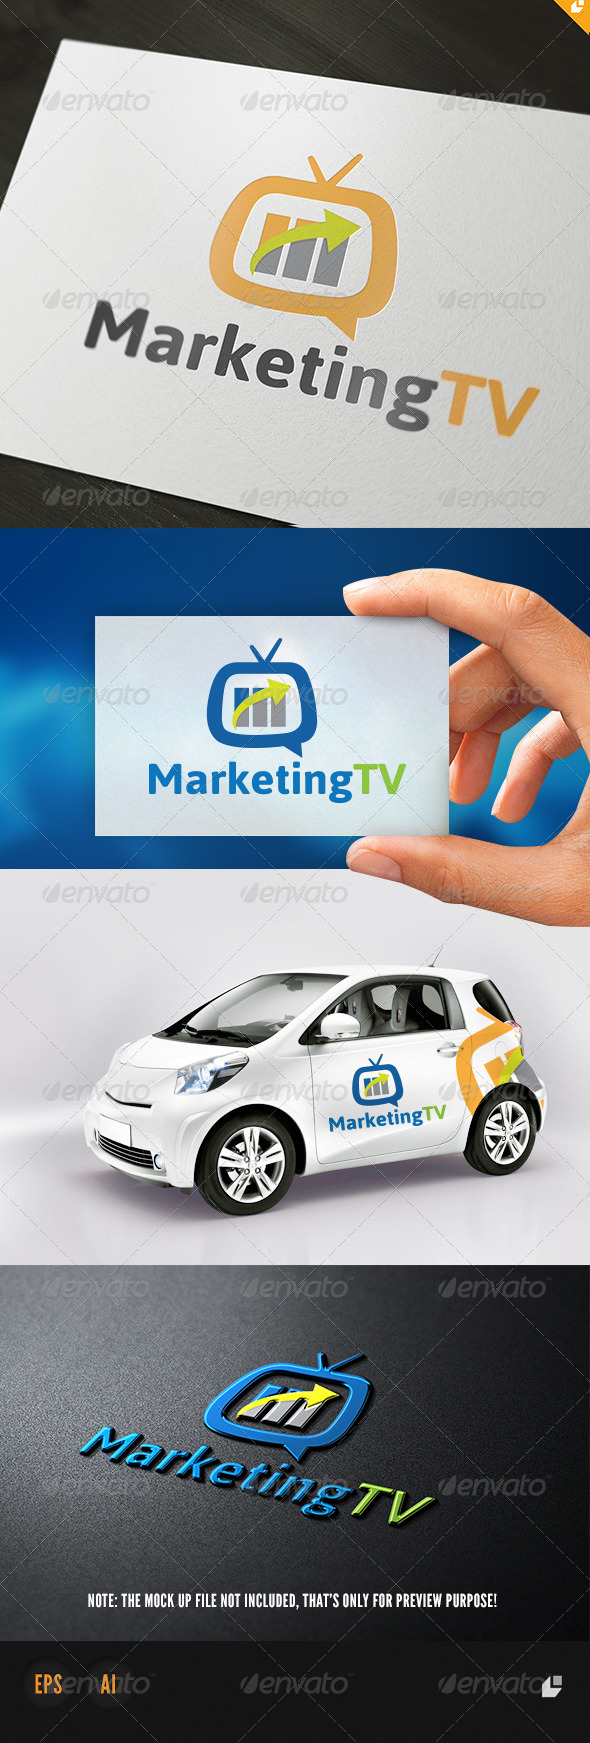 Marketing TV Logo